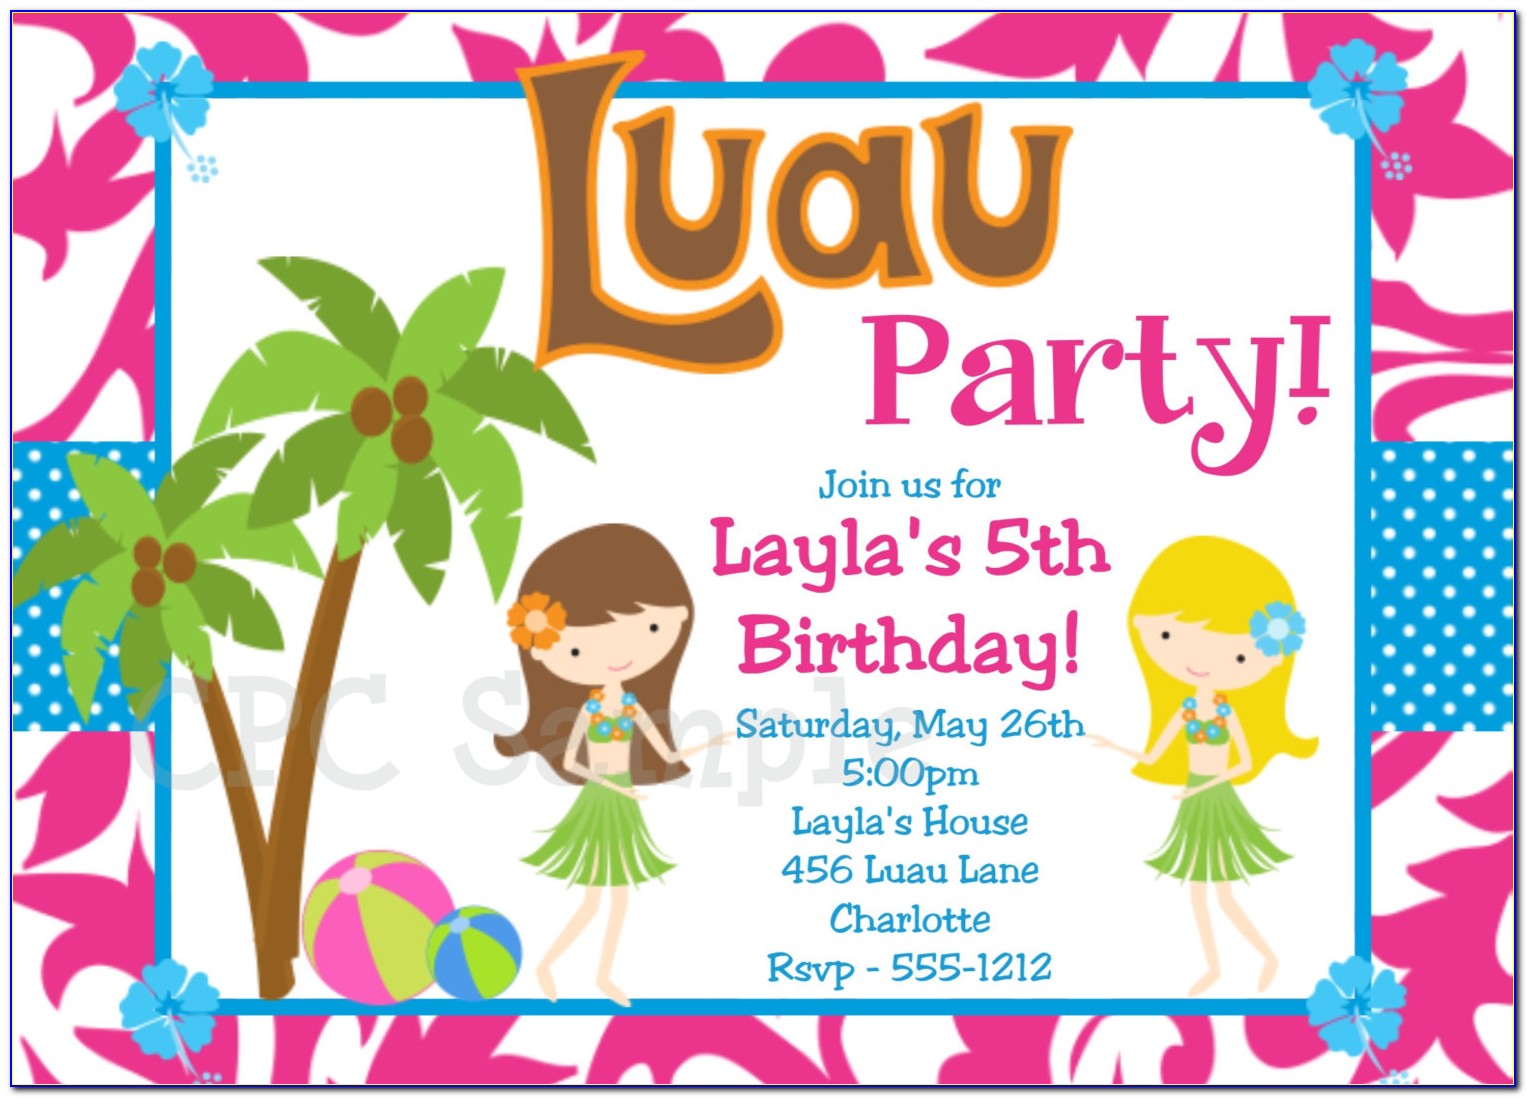 Luau Birthday Invitations Picture